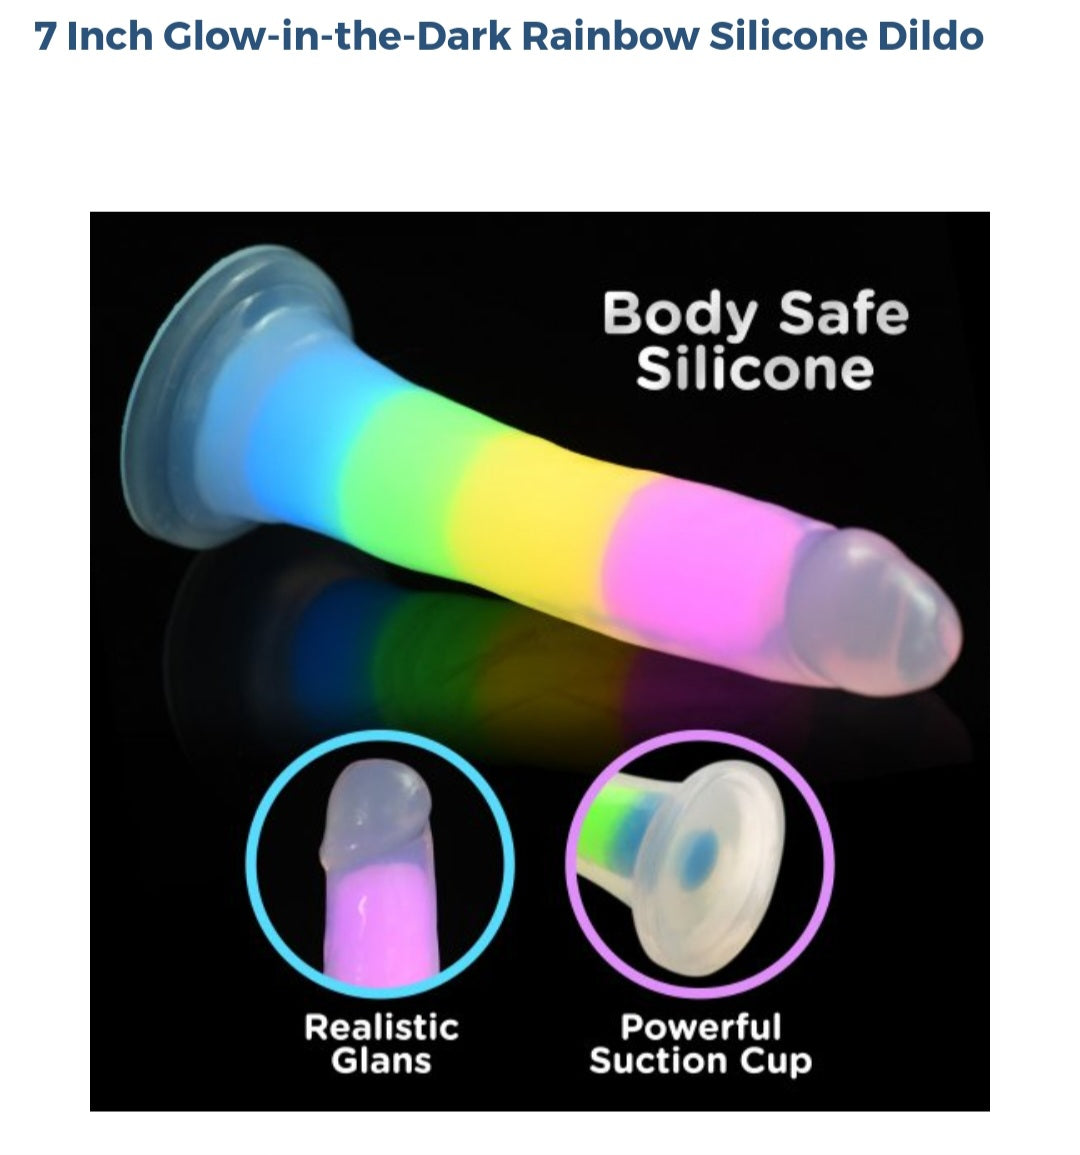 7 Inch Glow-In-The-Dark Rainbow Silicone Dildo